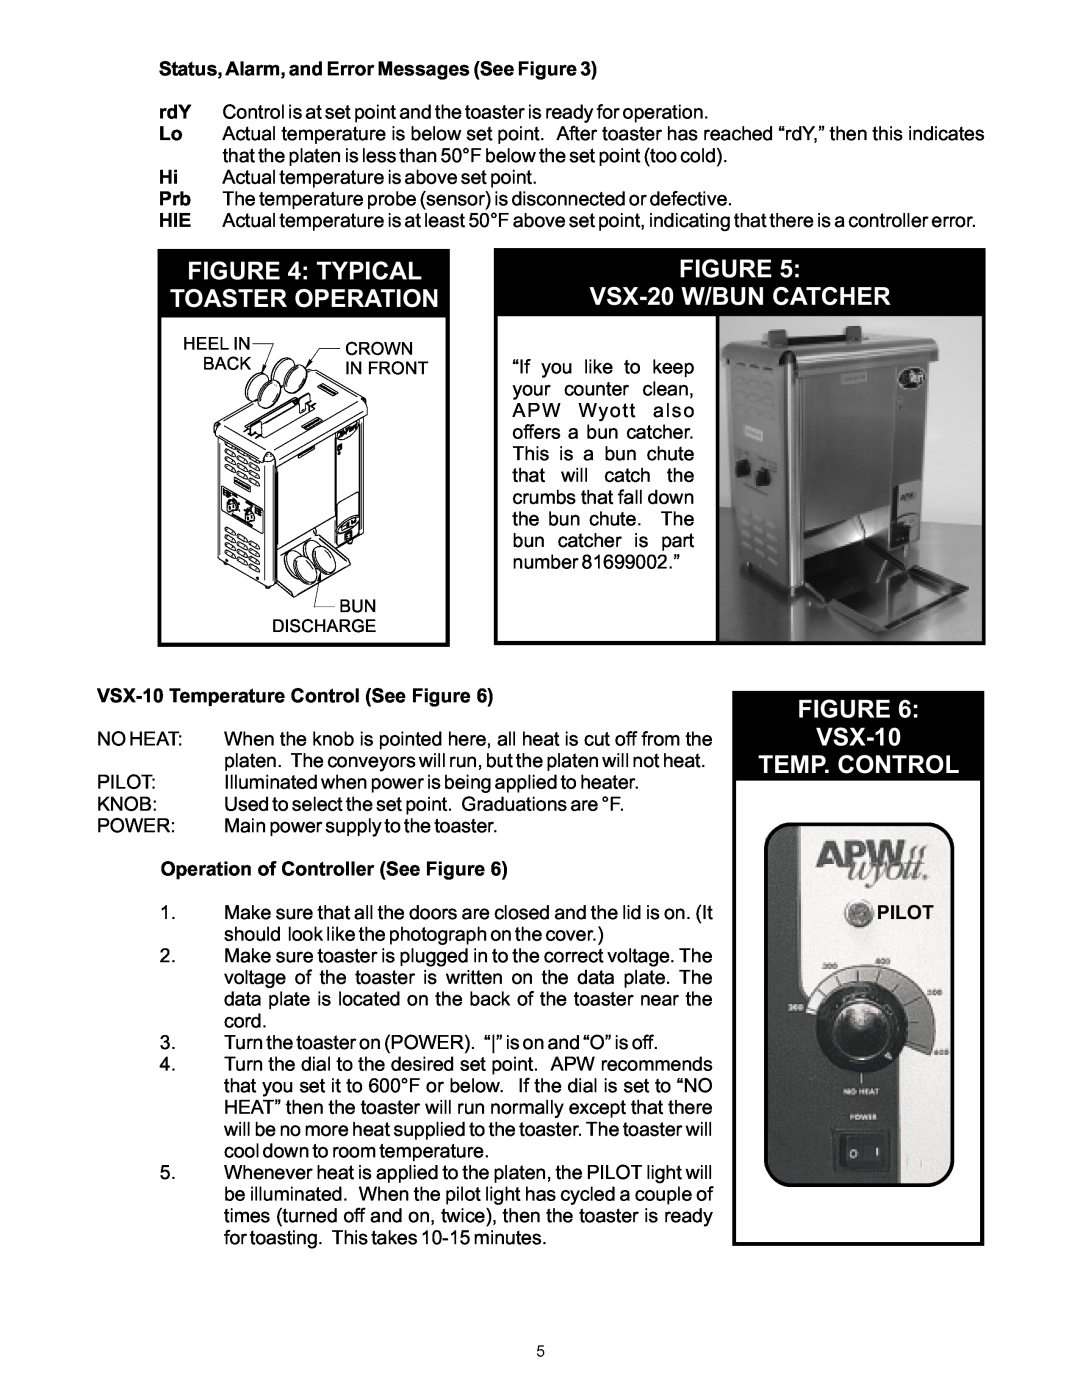 APW Wyott Typical, VSX-20 W/BUN CATCHER, VSX-10 TEMP. CONTROL, Toaster Operation, VSX-10 Temperature Control See Figure 